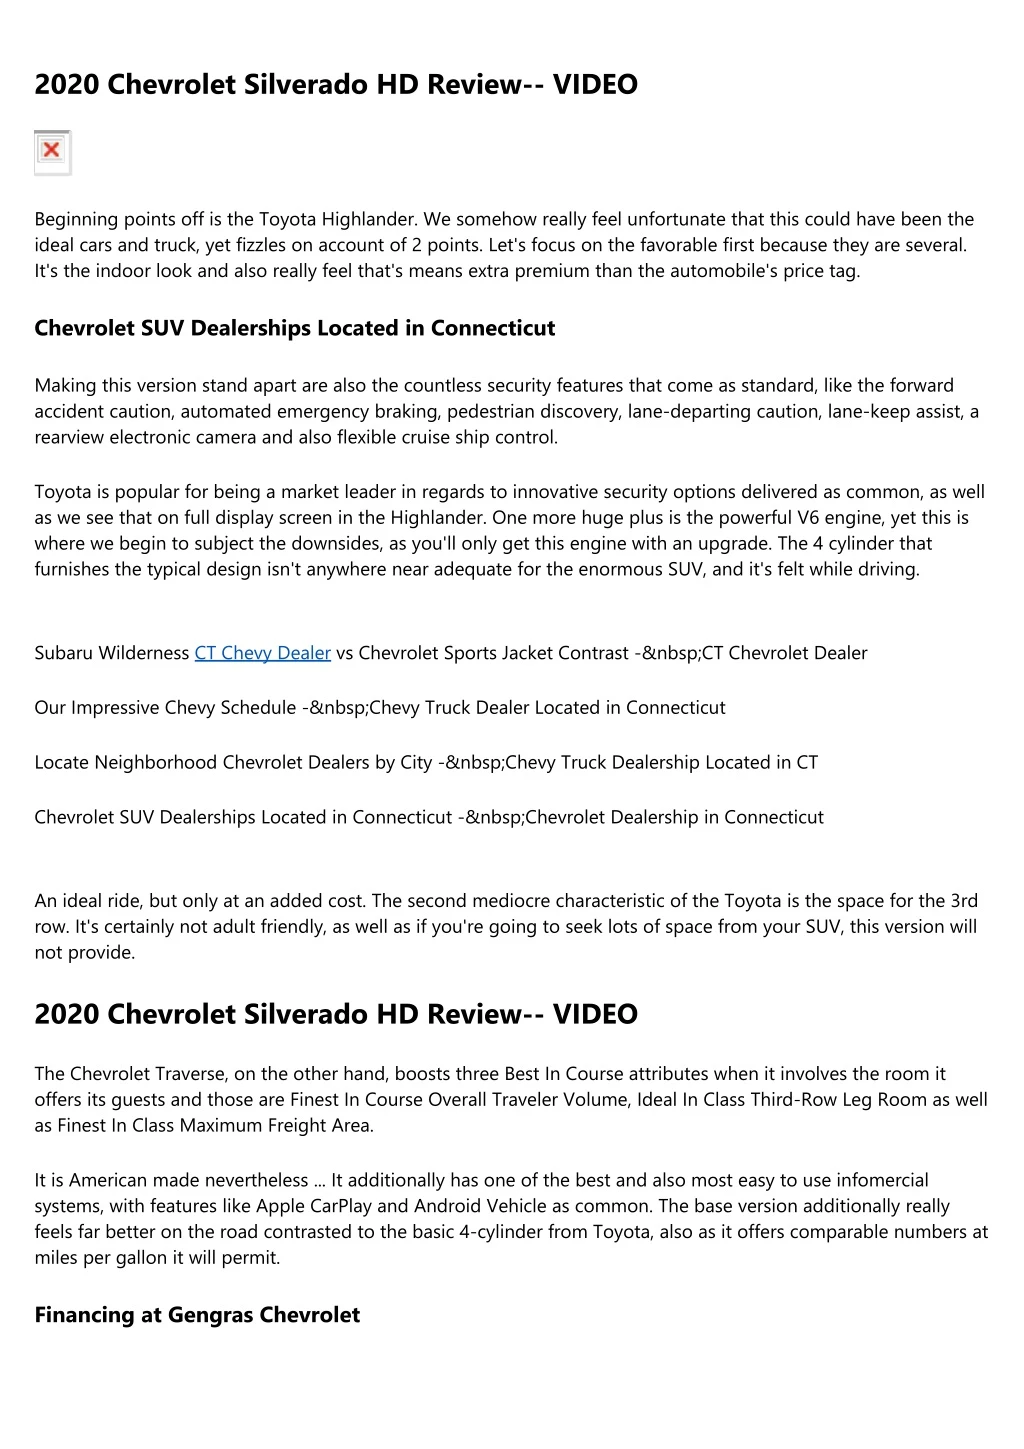 2020 chevrolet silverado hd review video